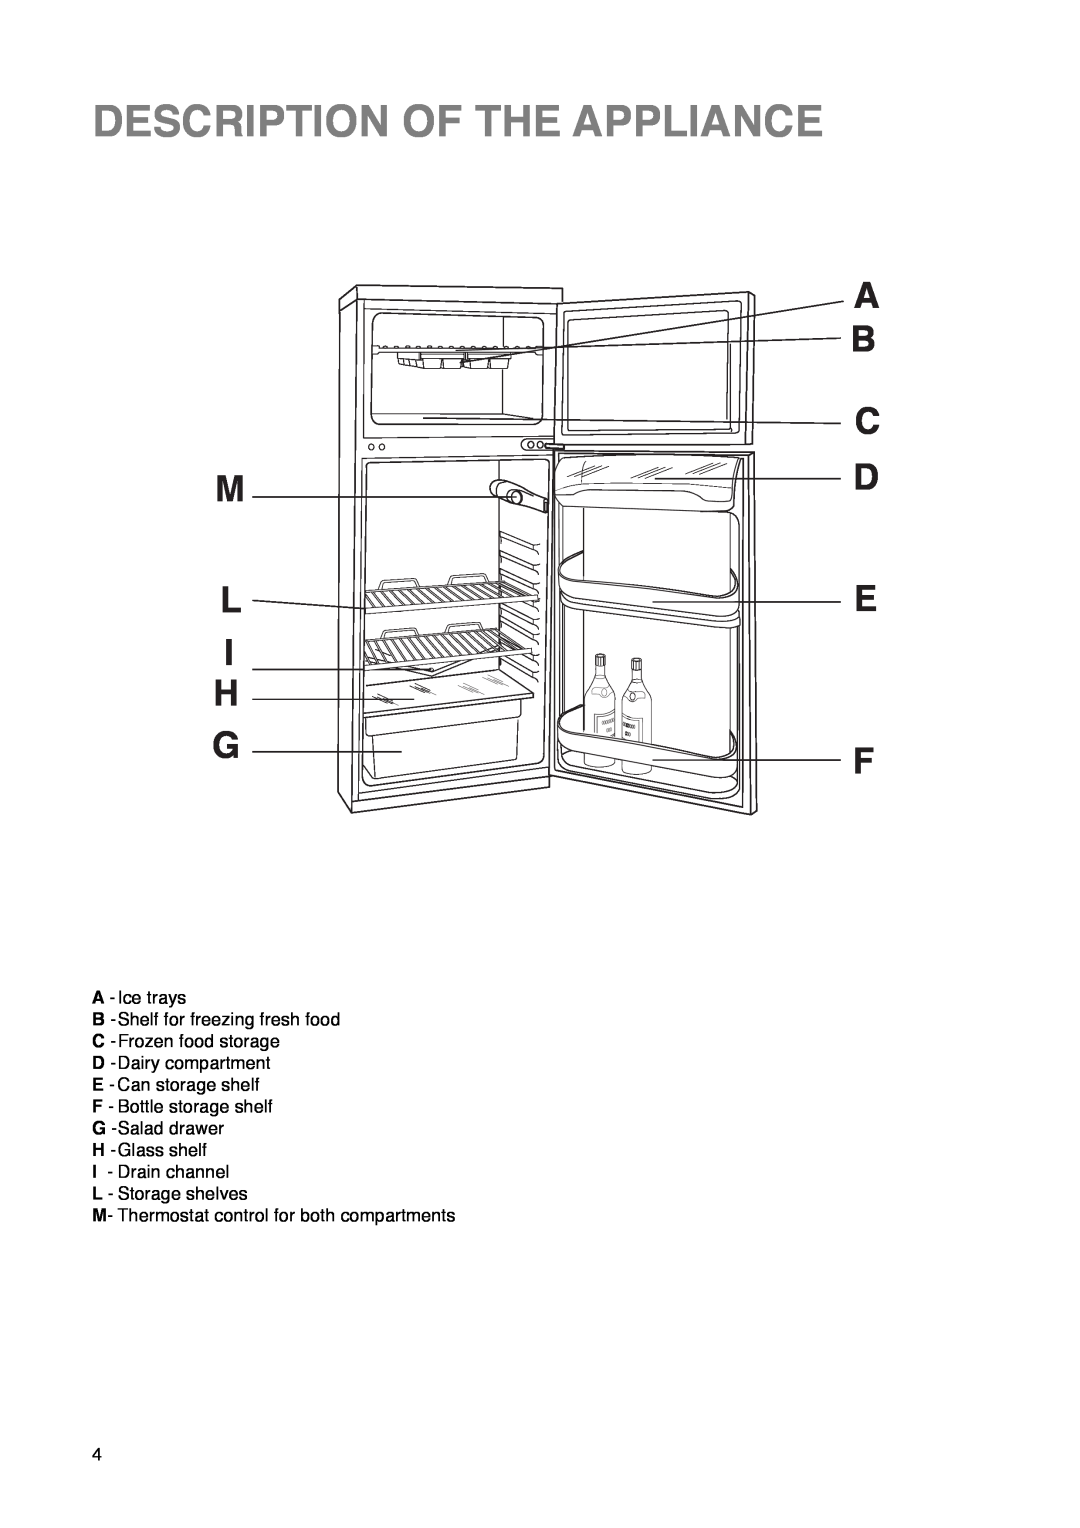 Zanussi Z 32/5 W manual Description Of The Appliance, M L I H G, A B C D E F 